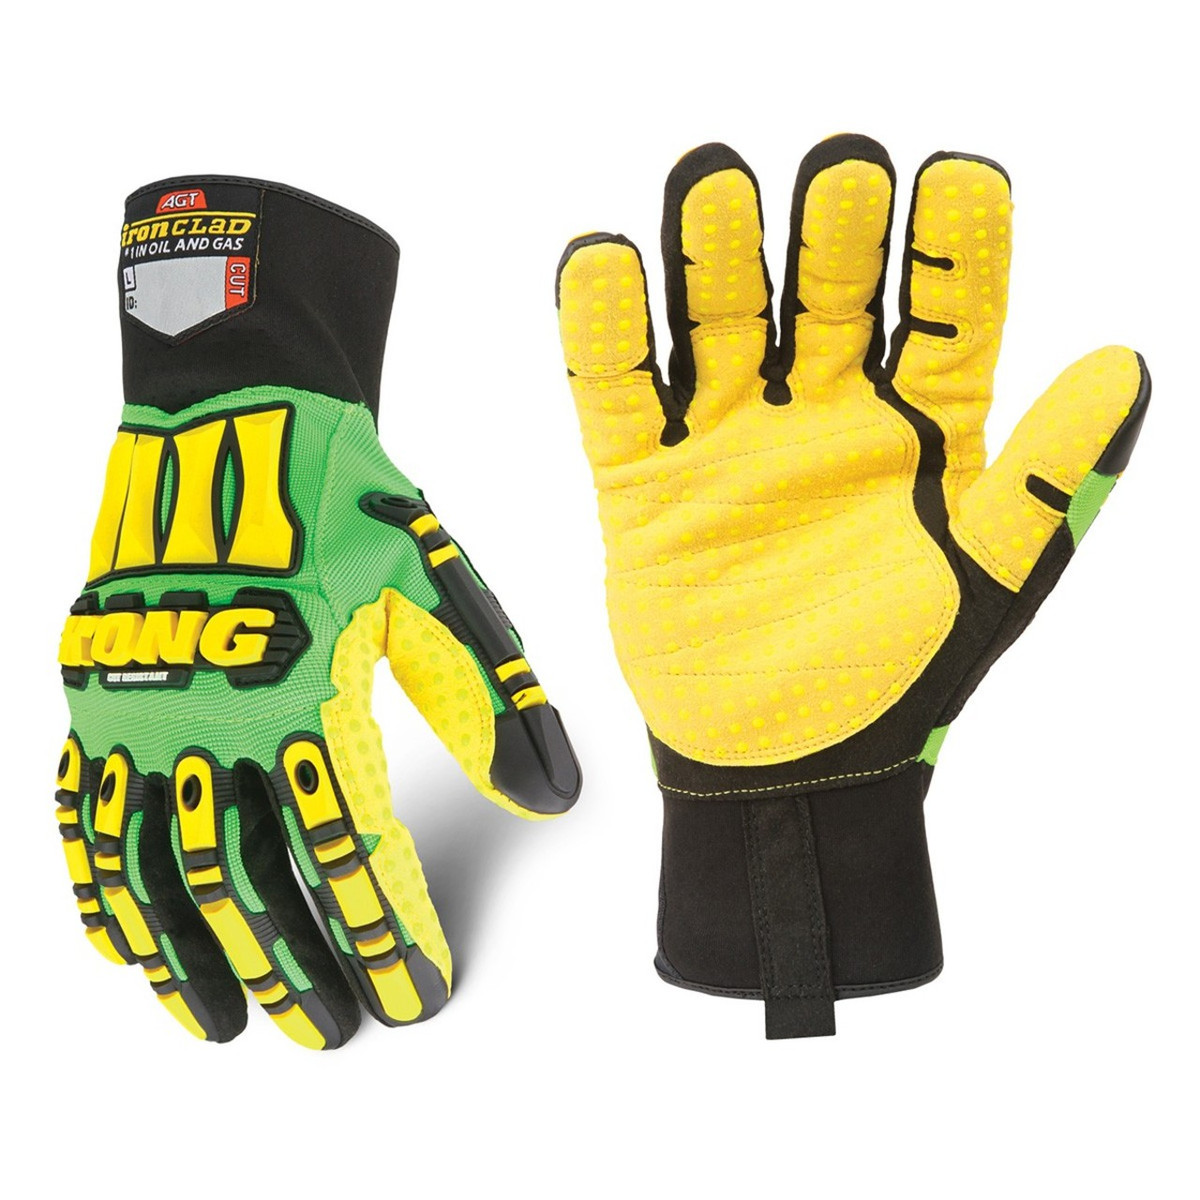 Ironclad KONG SDXC A5 Cut Resistant Work Gloves - Single Pair